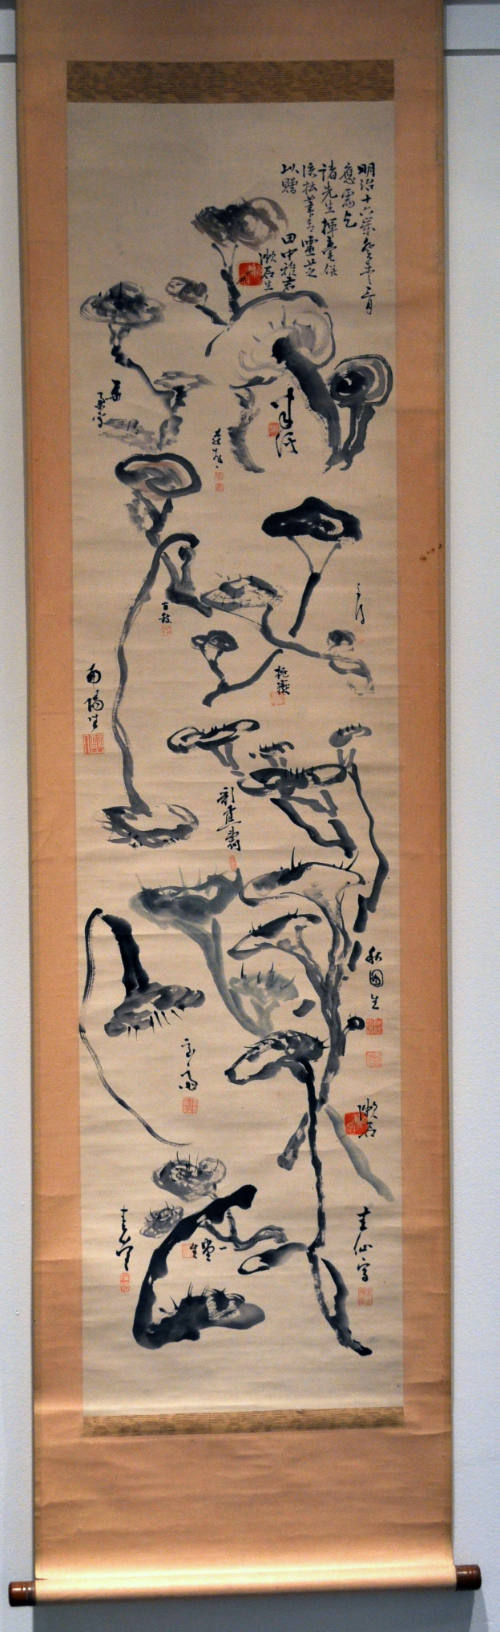 Tanaka, Gakun, with Twelve Scholar-Artists